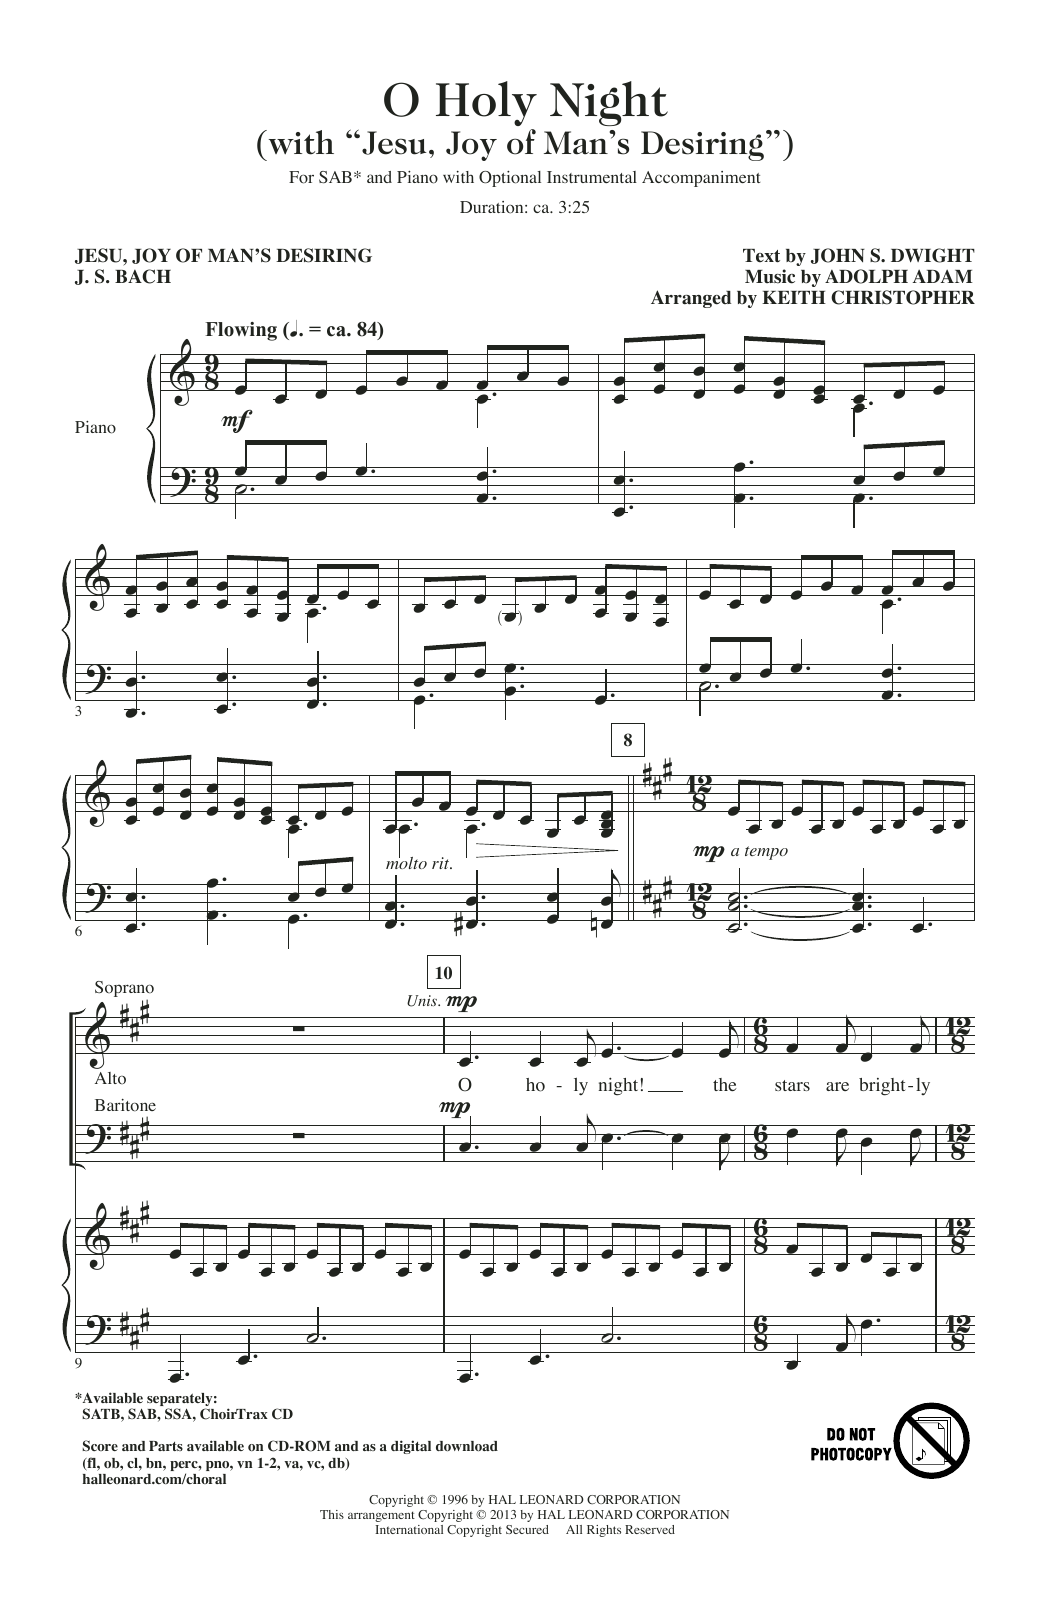 Keith Christopher O Holy Night (with Jesu, Joy Of Man's Desiring) Sheet Music Notes & Chords for SAB - Download or Print PDF